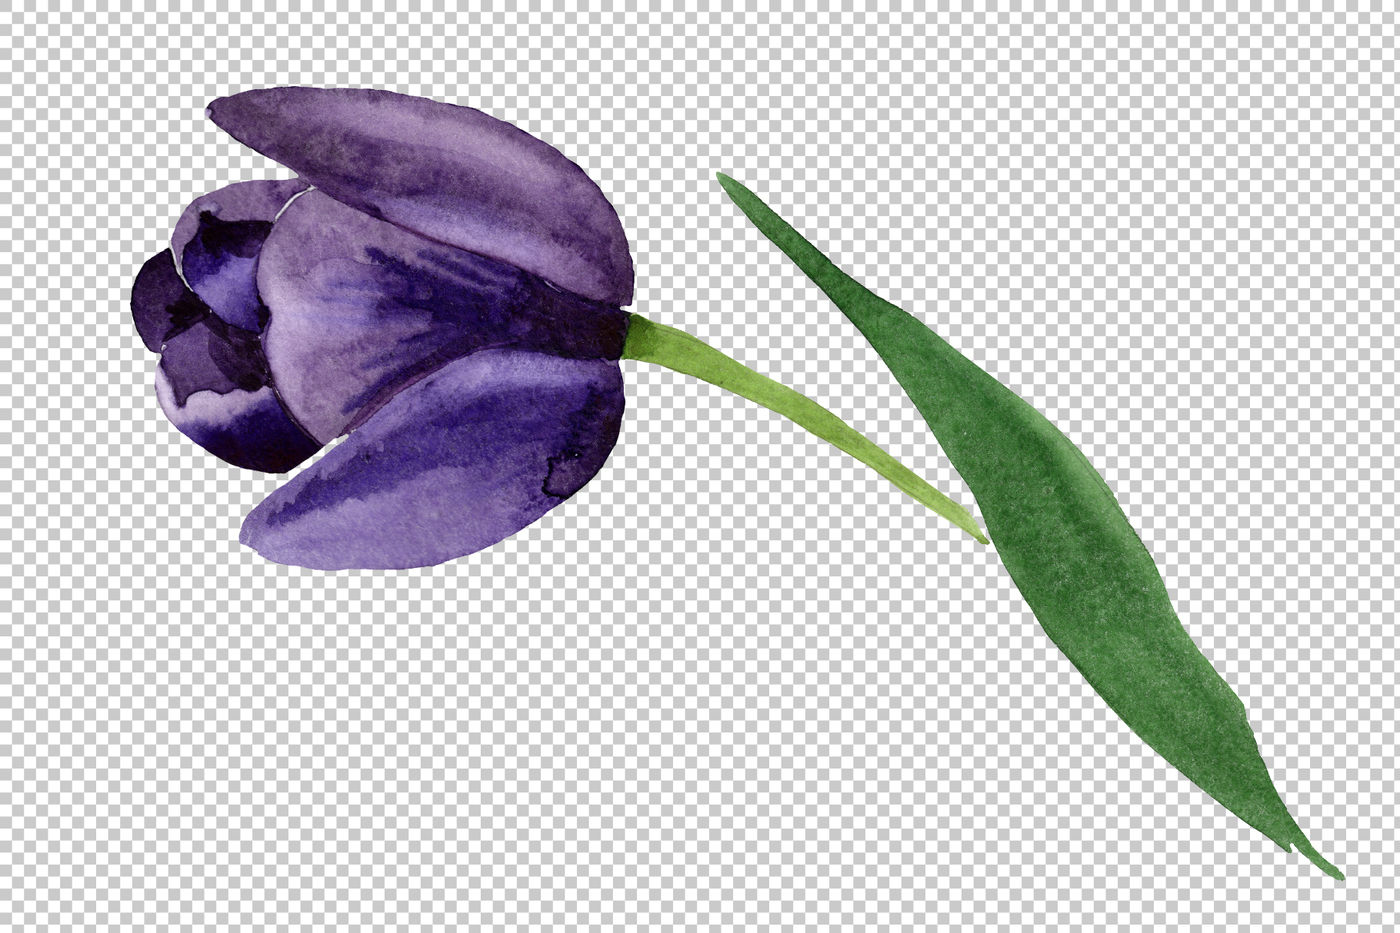  Black  tulips PNG watercolor  flower  set By MyStocks 